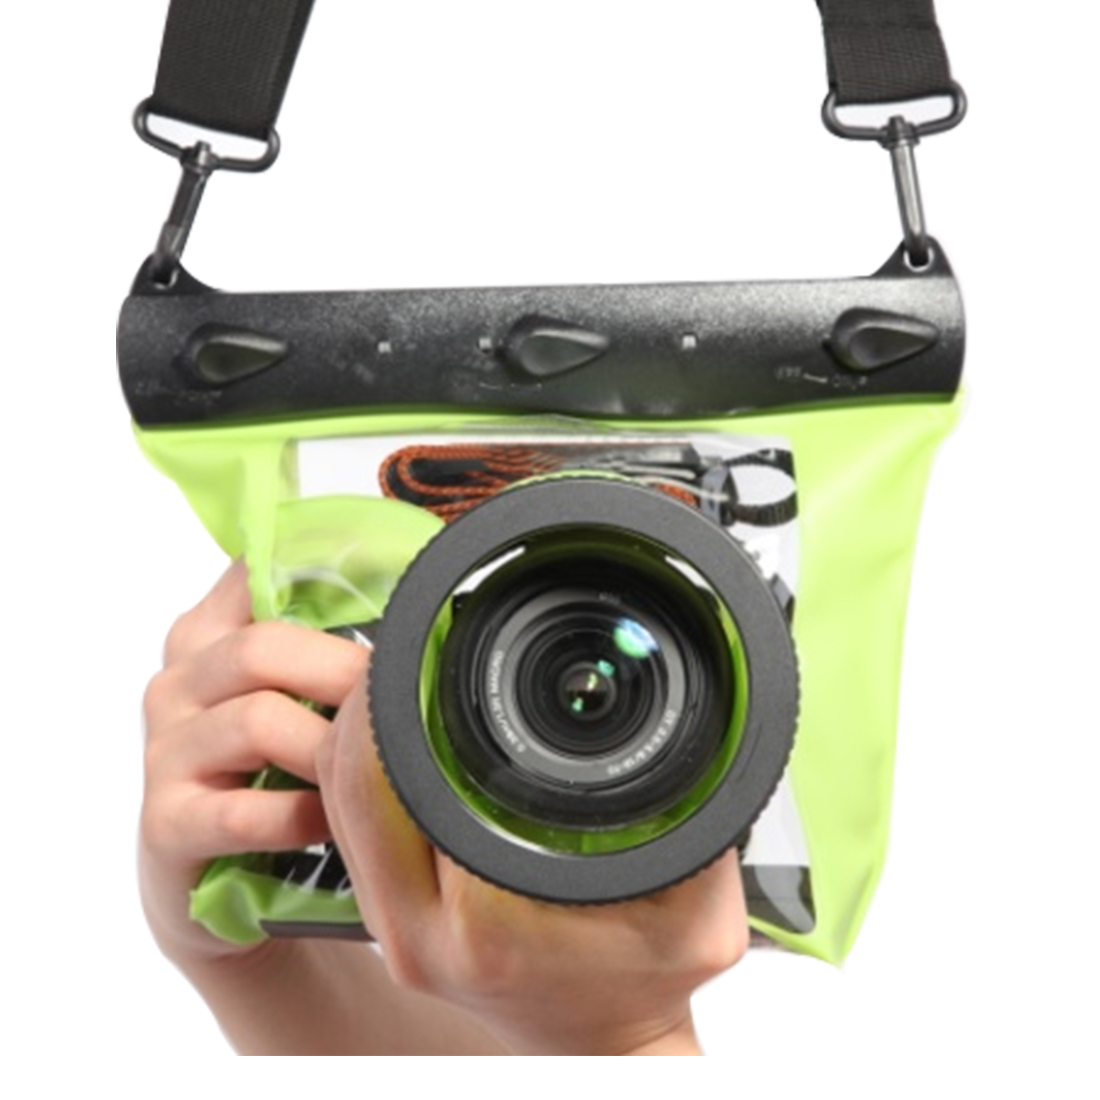 Centechia Onderwater Duiken Camera Behuizing Case Pouch Dry Bag Camera Waterdichte Dry Bag Voor Canon Nikon Dslr Slr